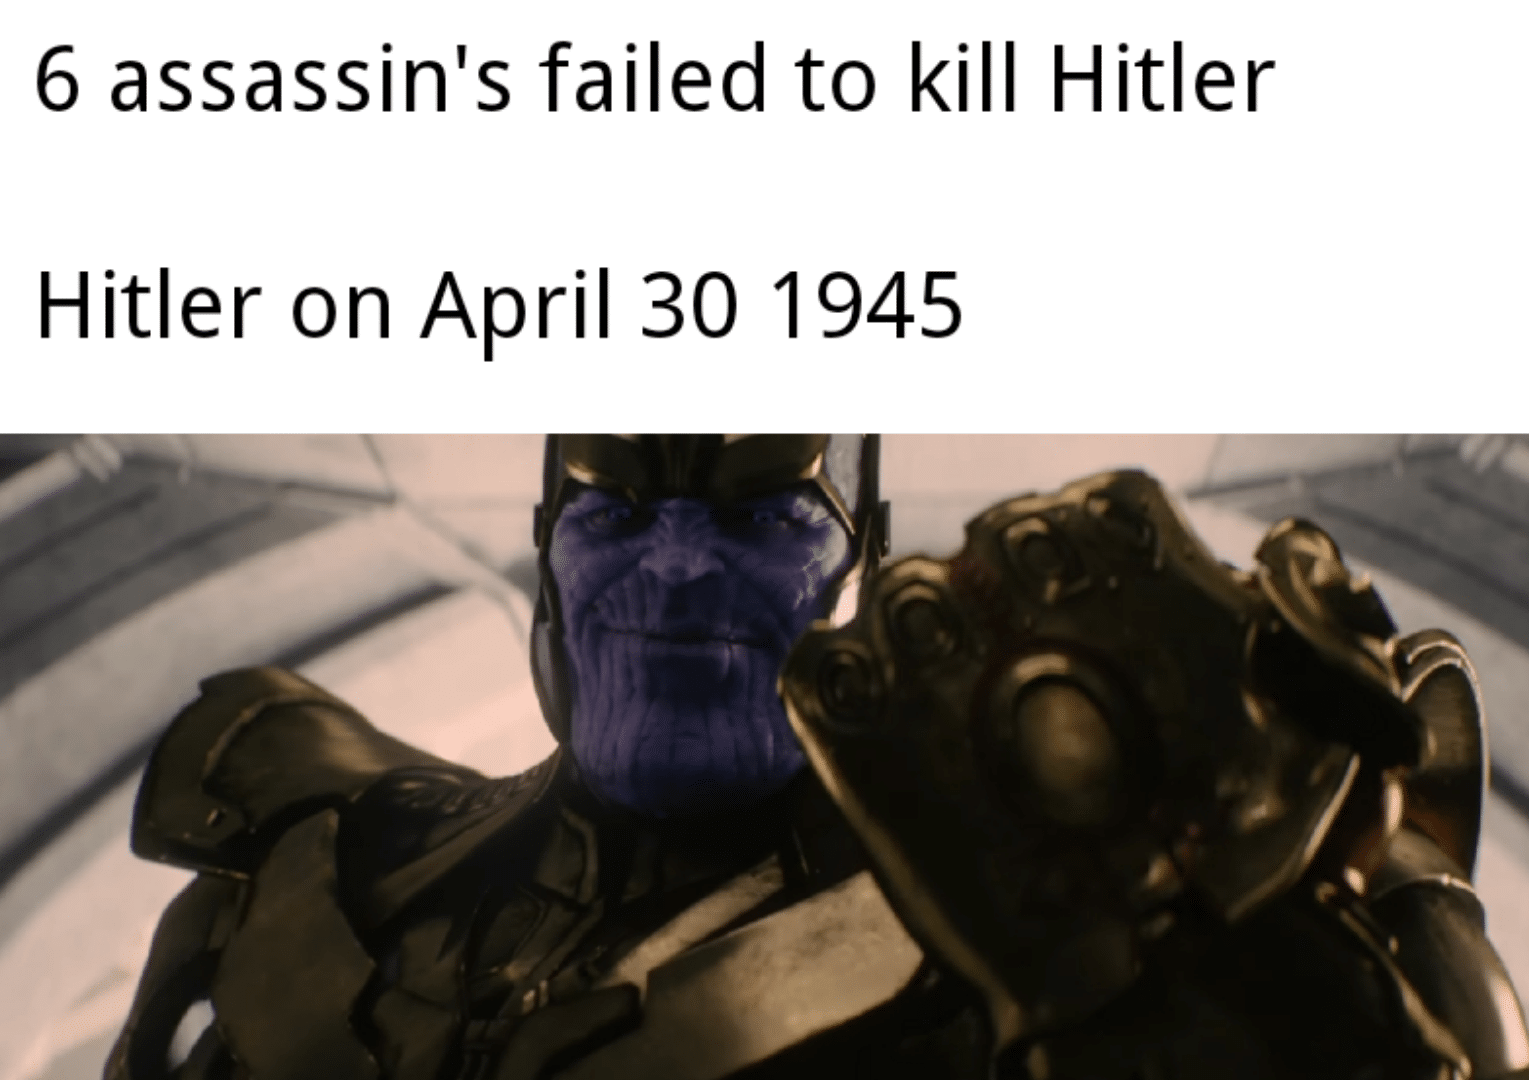 thanos avengers-memes thanos text: 6 assassin's failed to kill Hitler Hitler on April 30 1945 